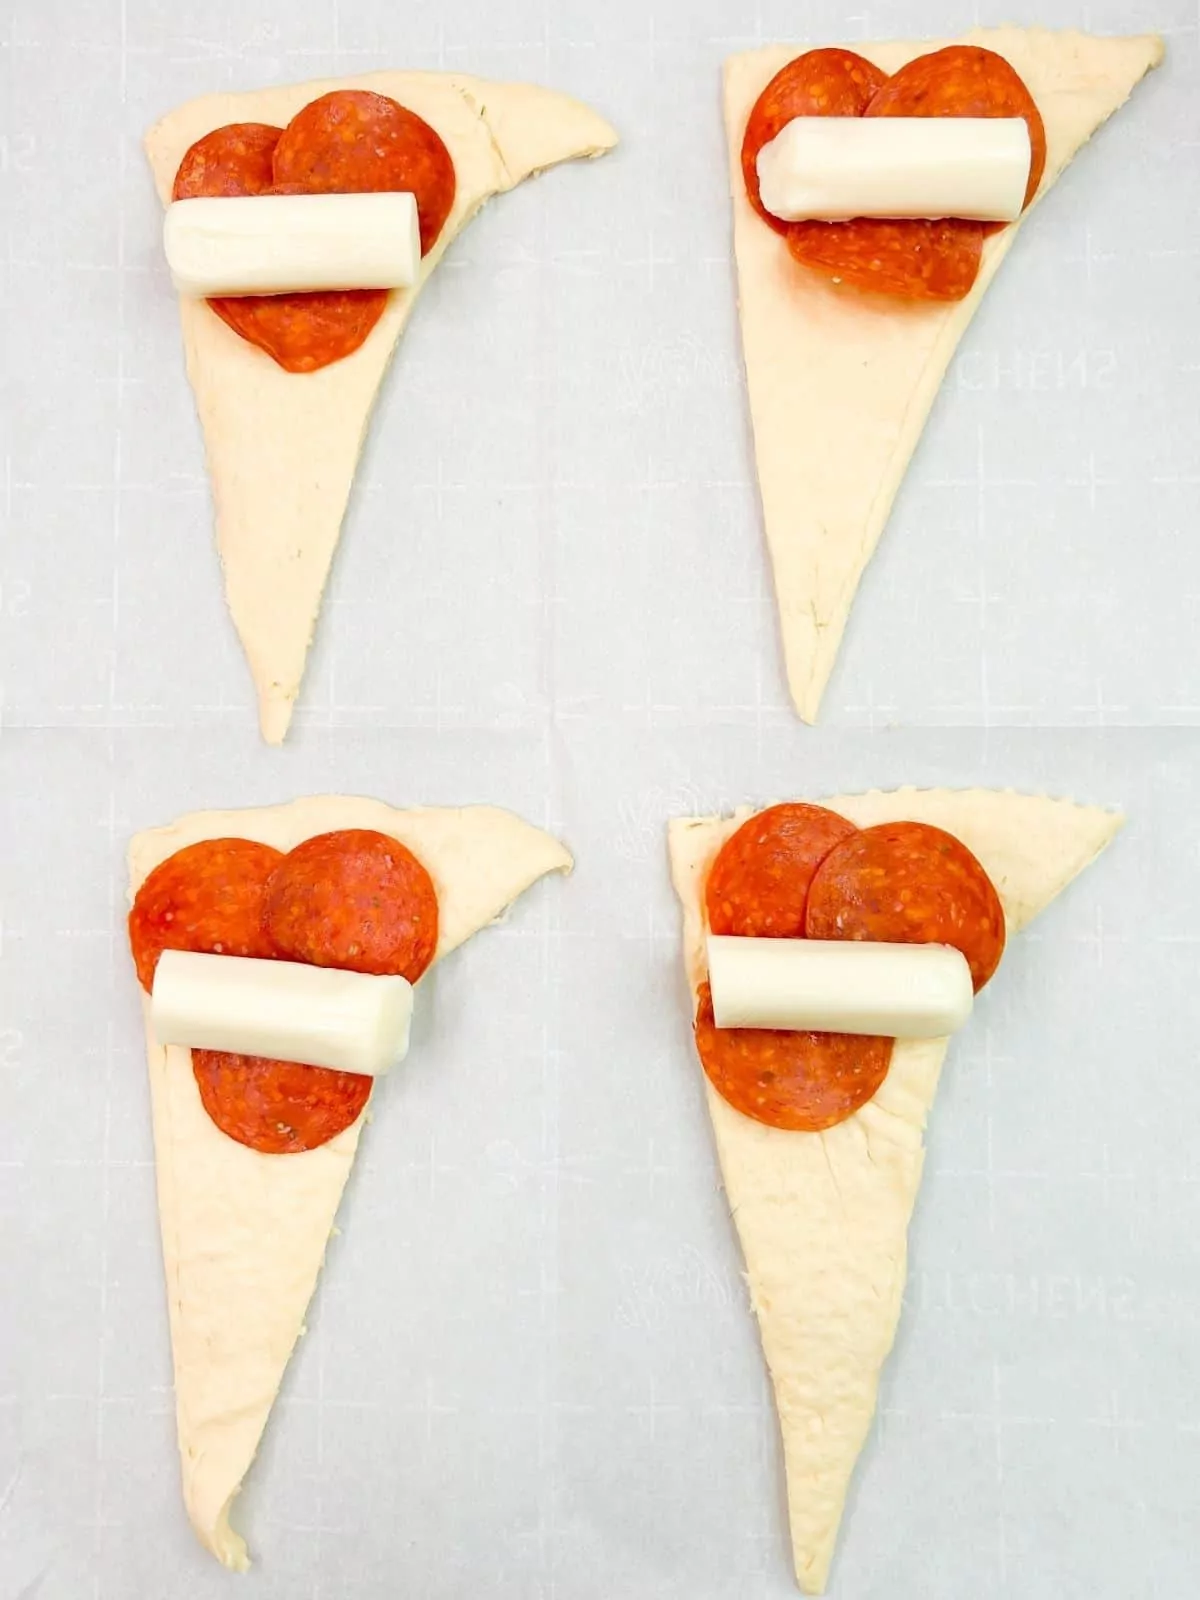 mozzarella cheese stick, pepperoni on top of crescent roll dough triangles.